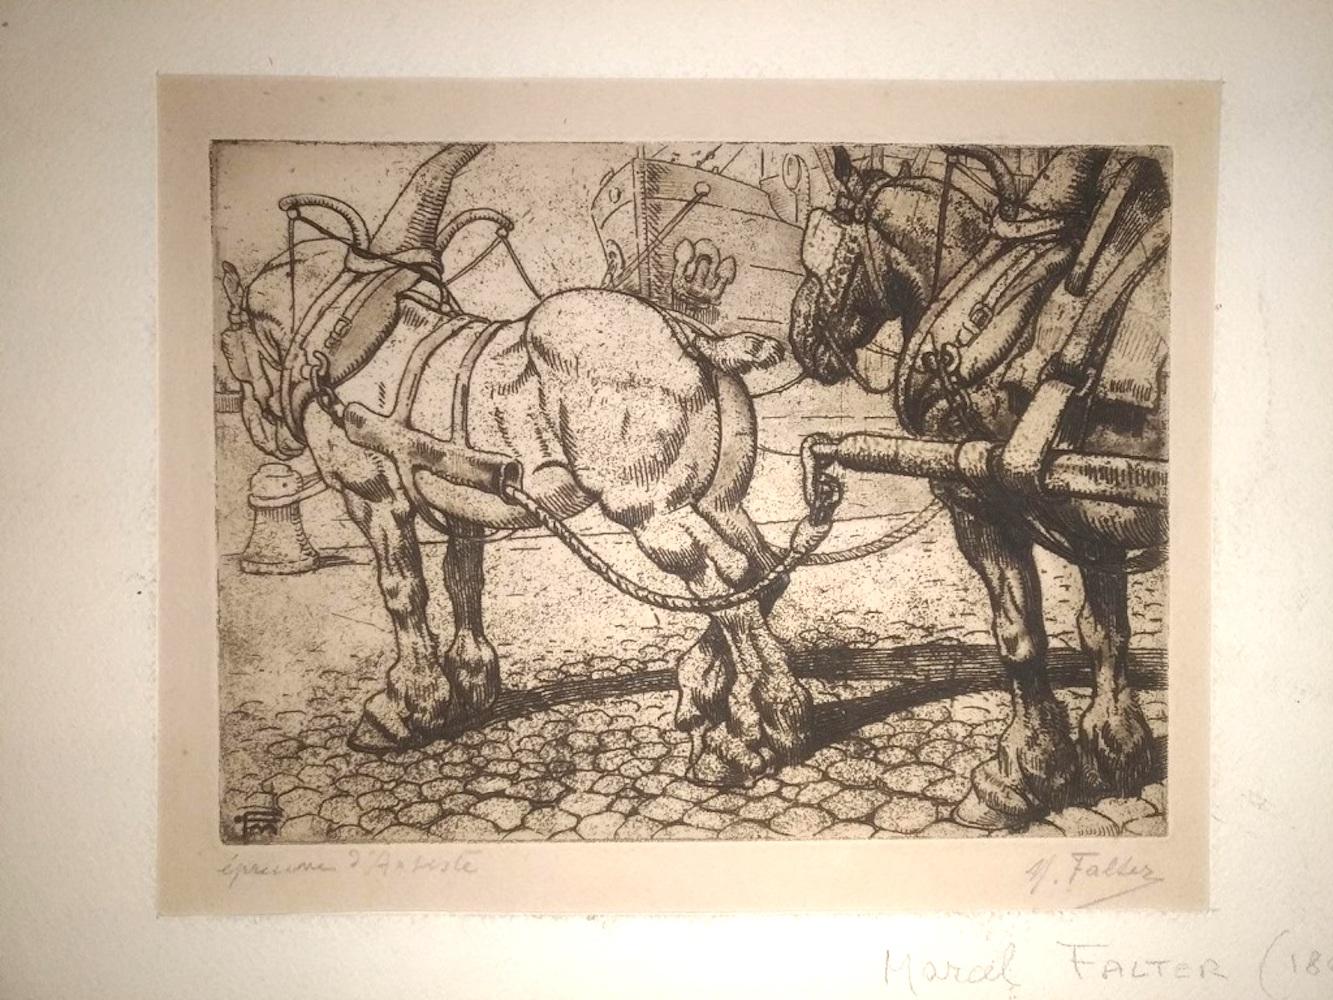 Marcel Falter Animal Print - The Plow - Original Etching by M. Falter - 1920 ca.